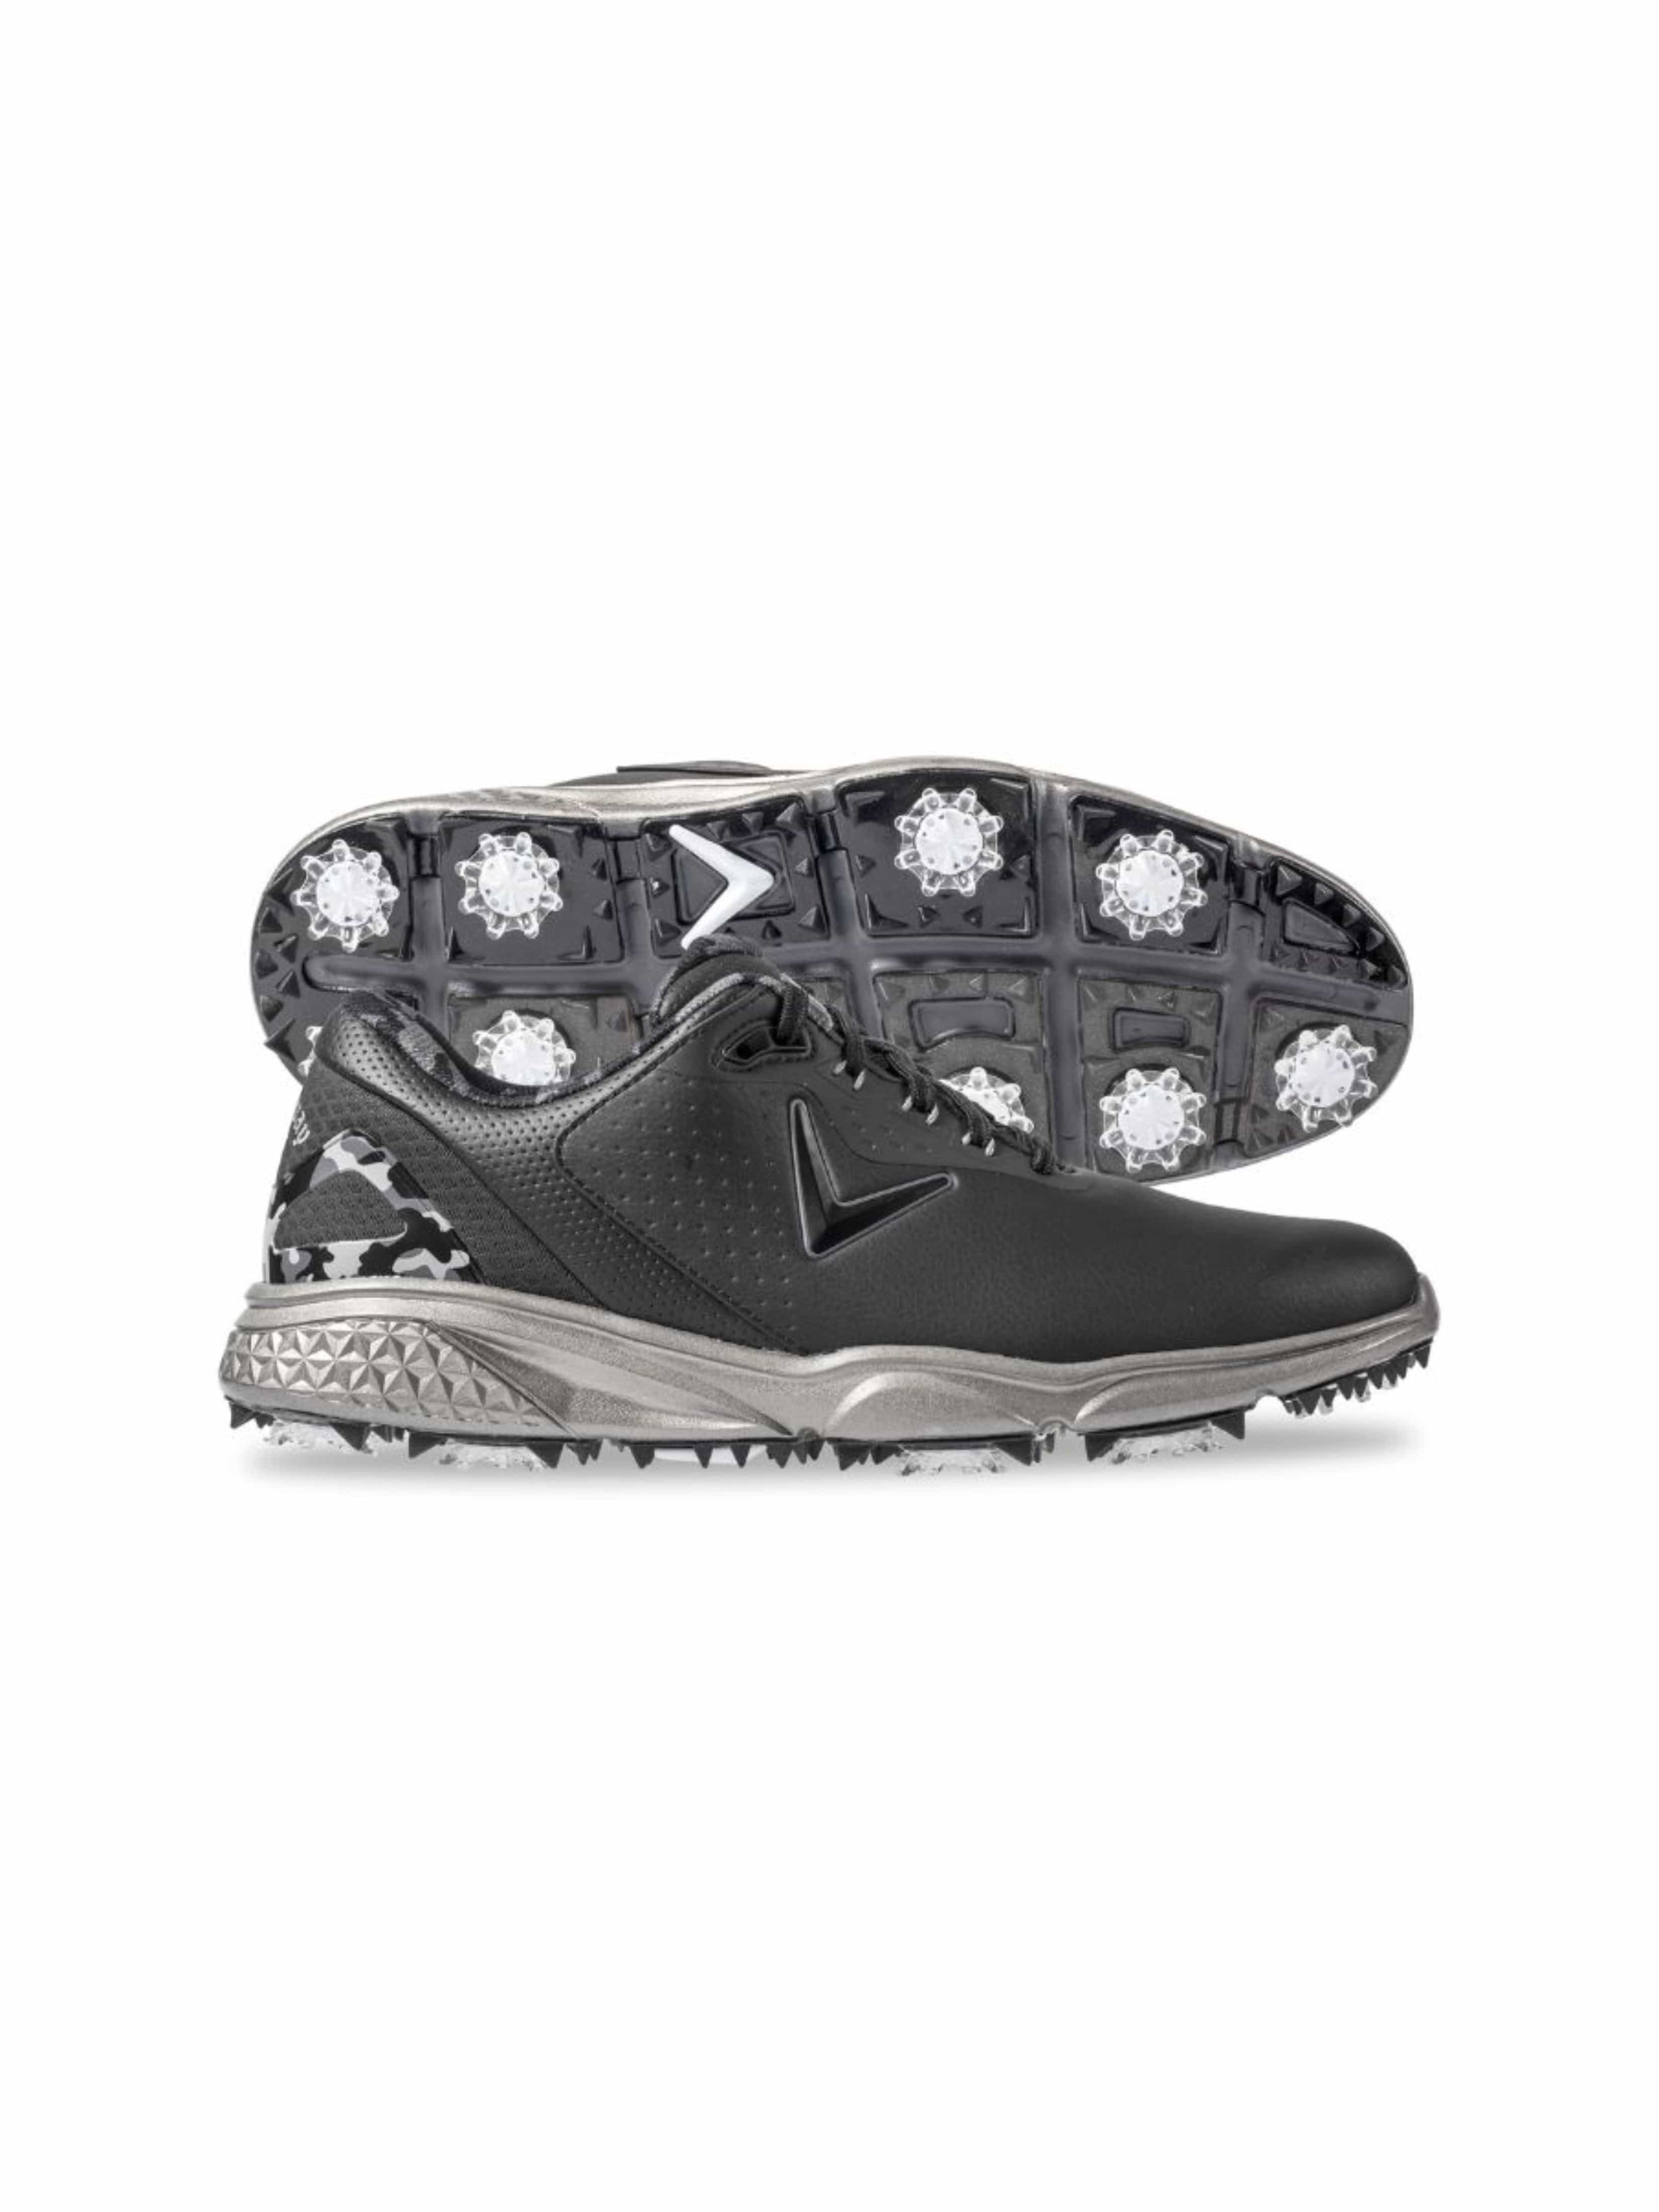 Callaway Apparel Mens Coronado V2 Golf Shoes, Size 8.5, Black, Polyurethane/Nylon | Golf Apparel Shop